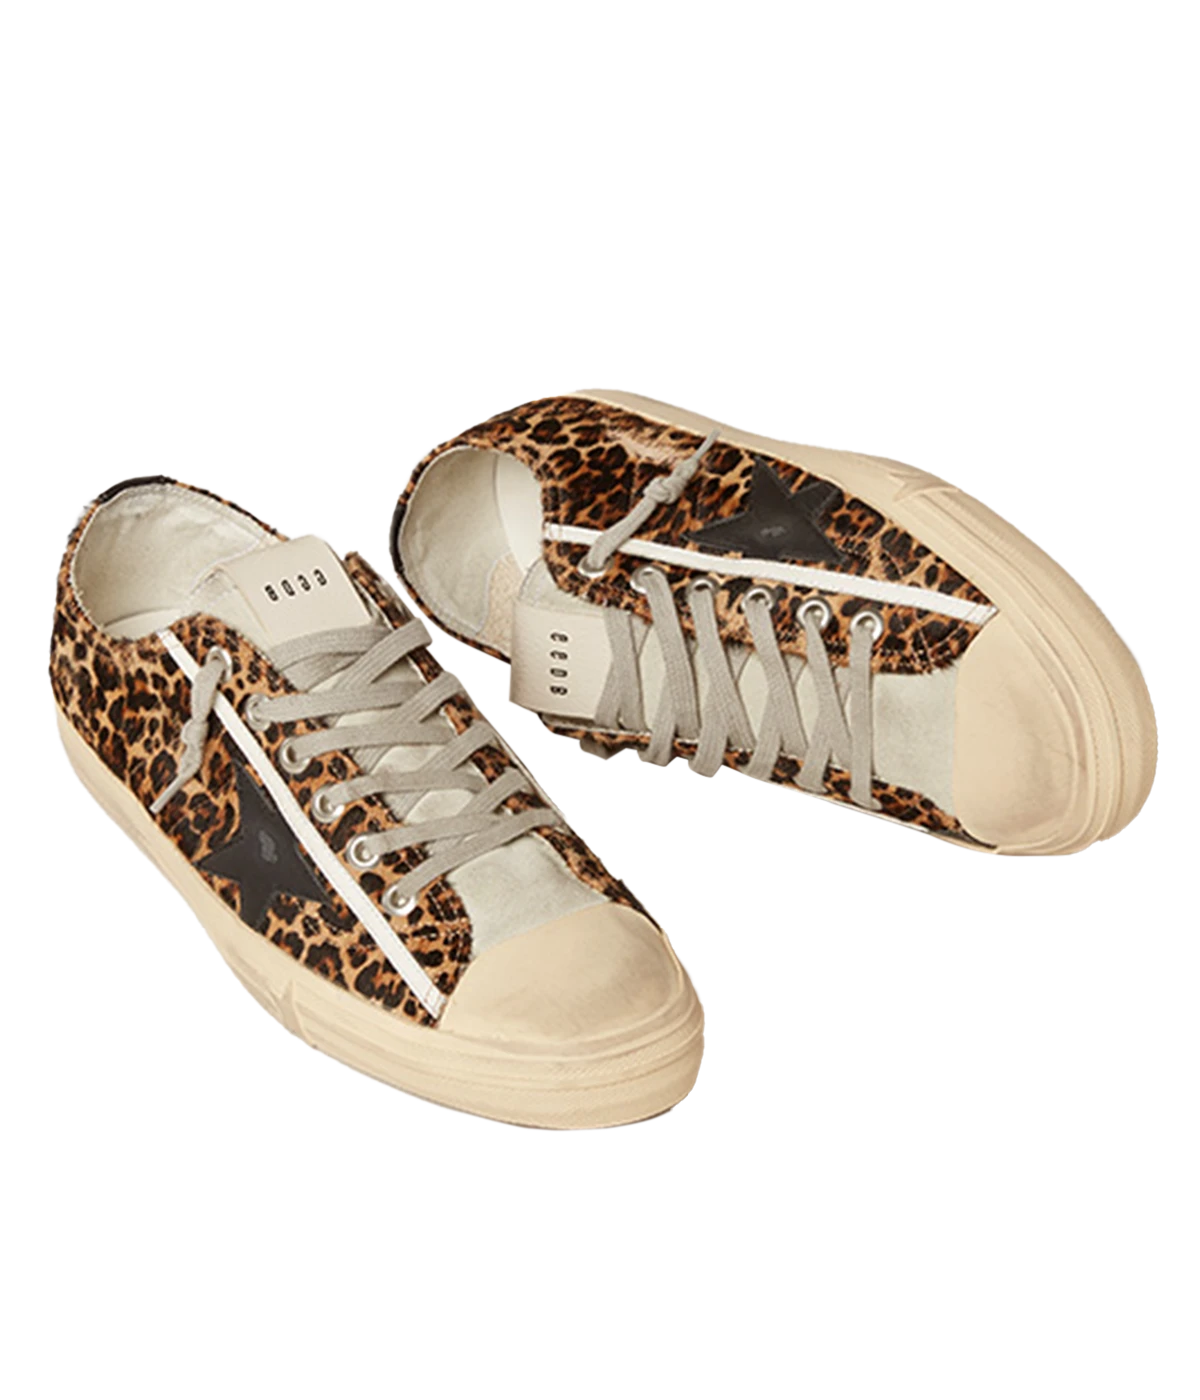 V-Star 2 Leopard Sneaker in Beige, Brown, Leo & Black